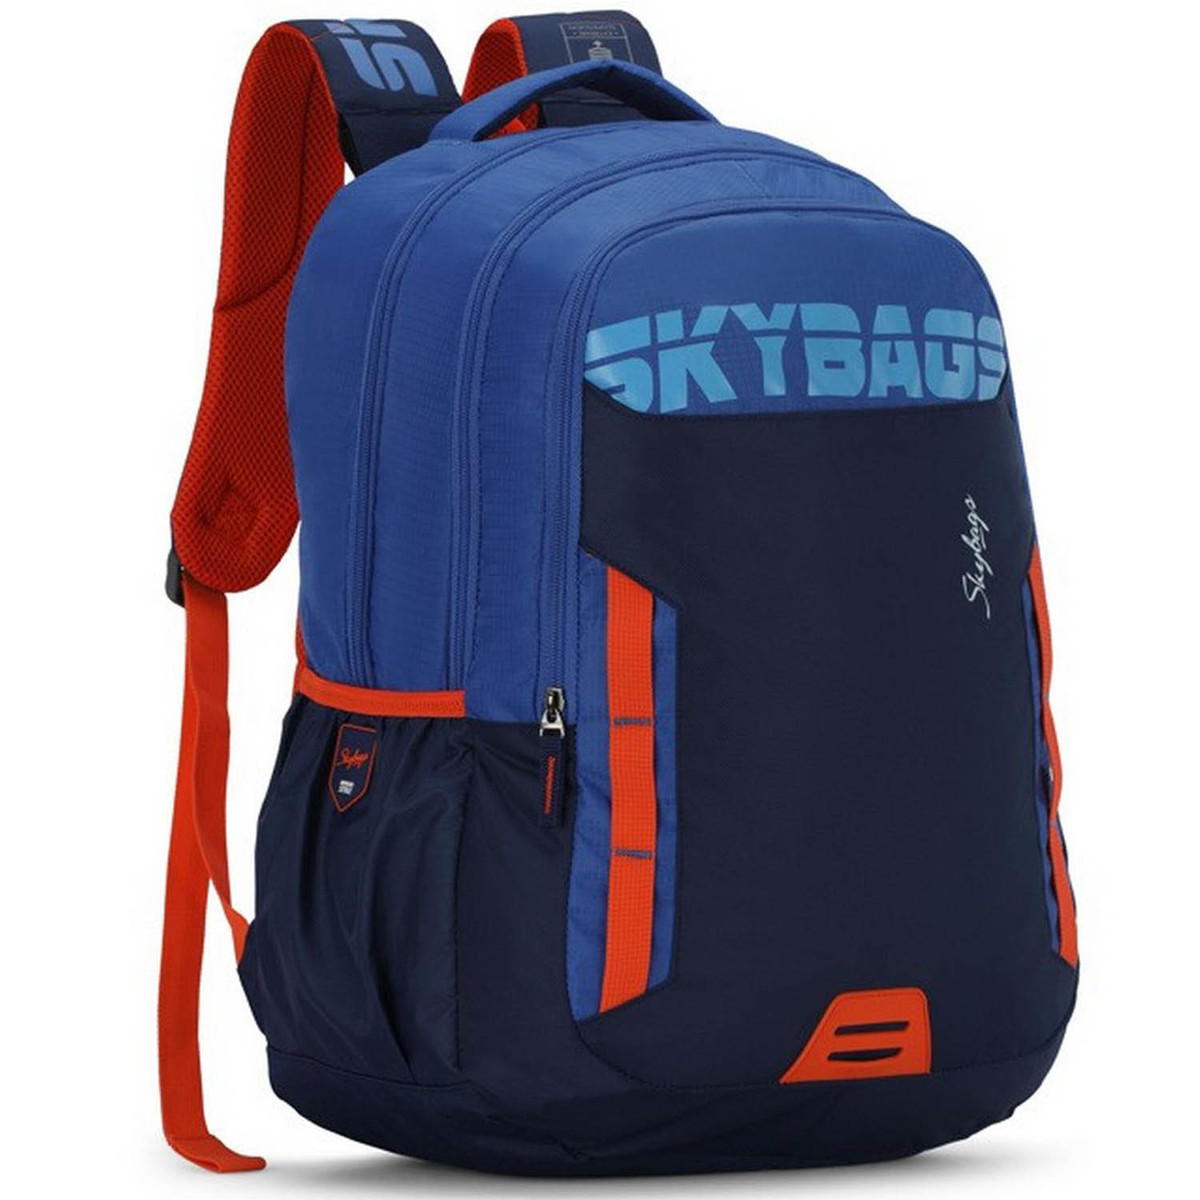 SkyBags School Back Pack Figo Extra SKBPFIGE2 Blue 19inch | School Back ...